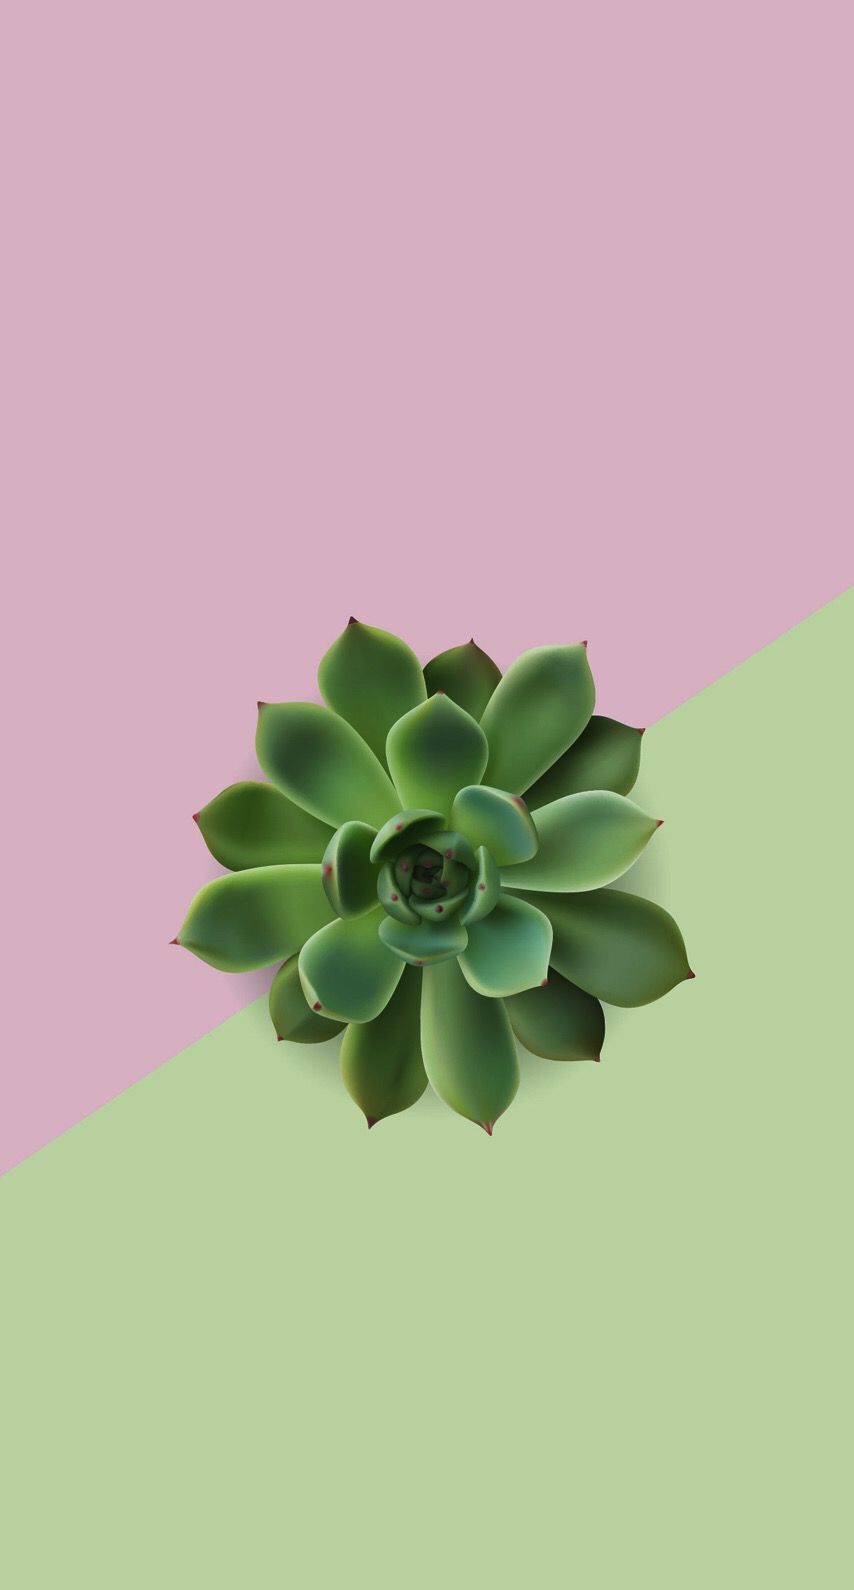 Succulent plant pink green phone wallpaper backgrounds lockscreen fondo pantalla colorido fondos pantalla bonitos fondos